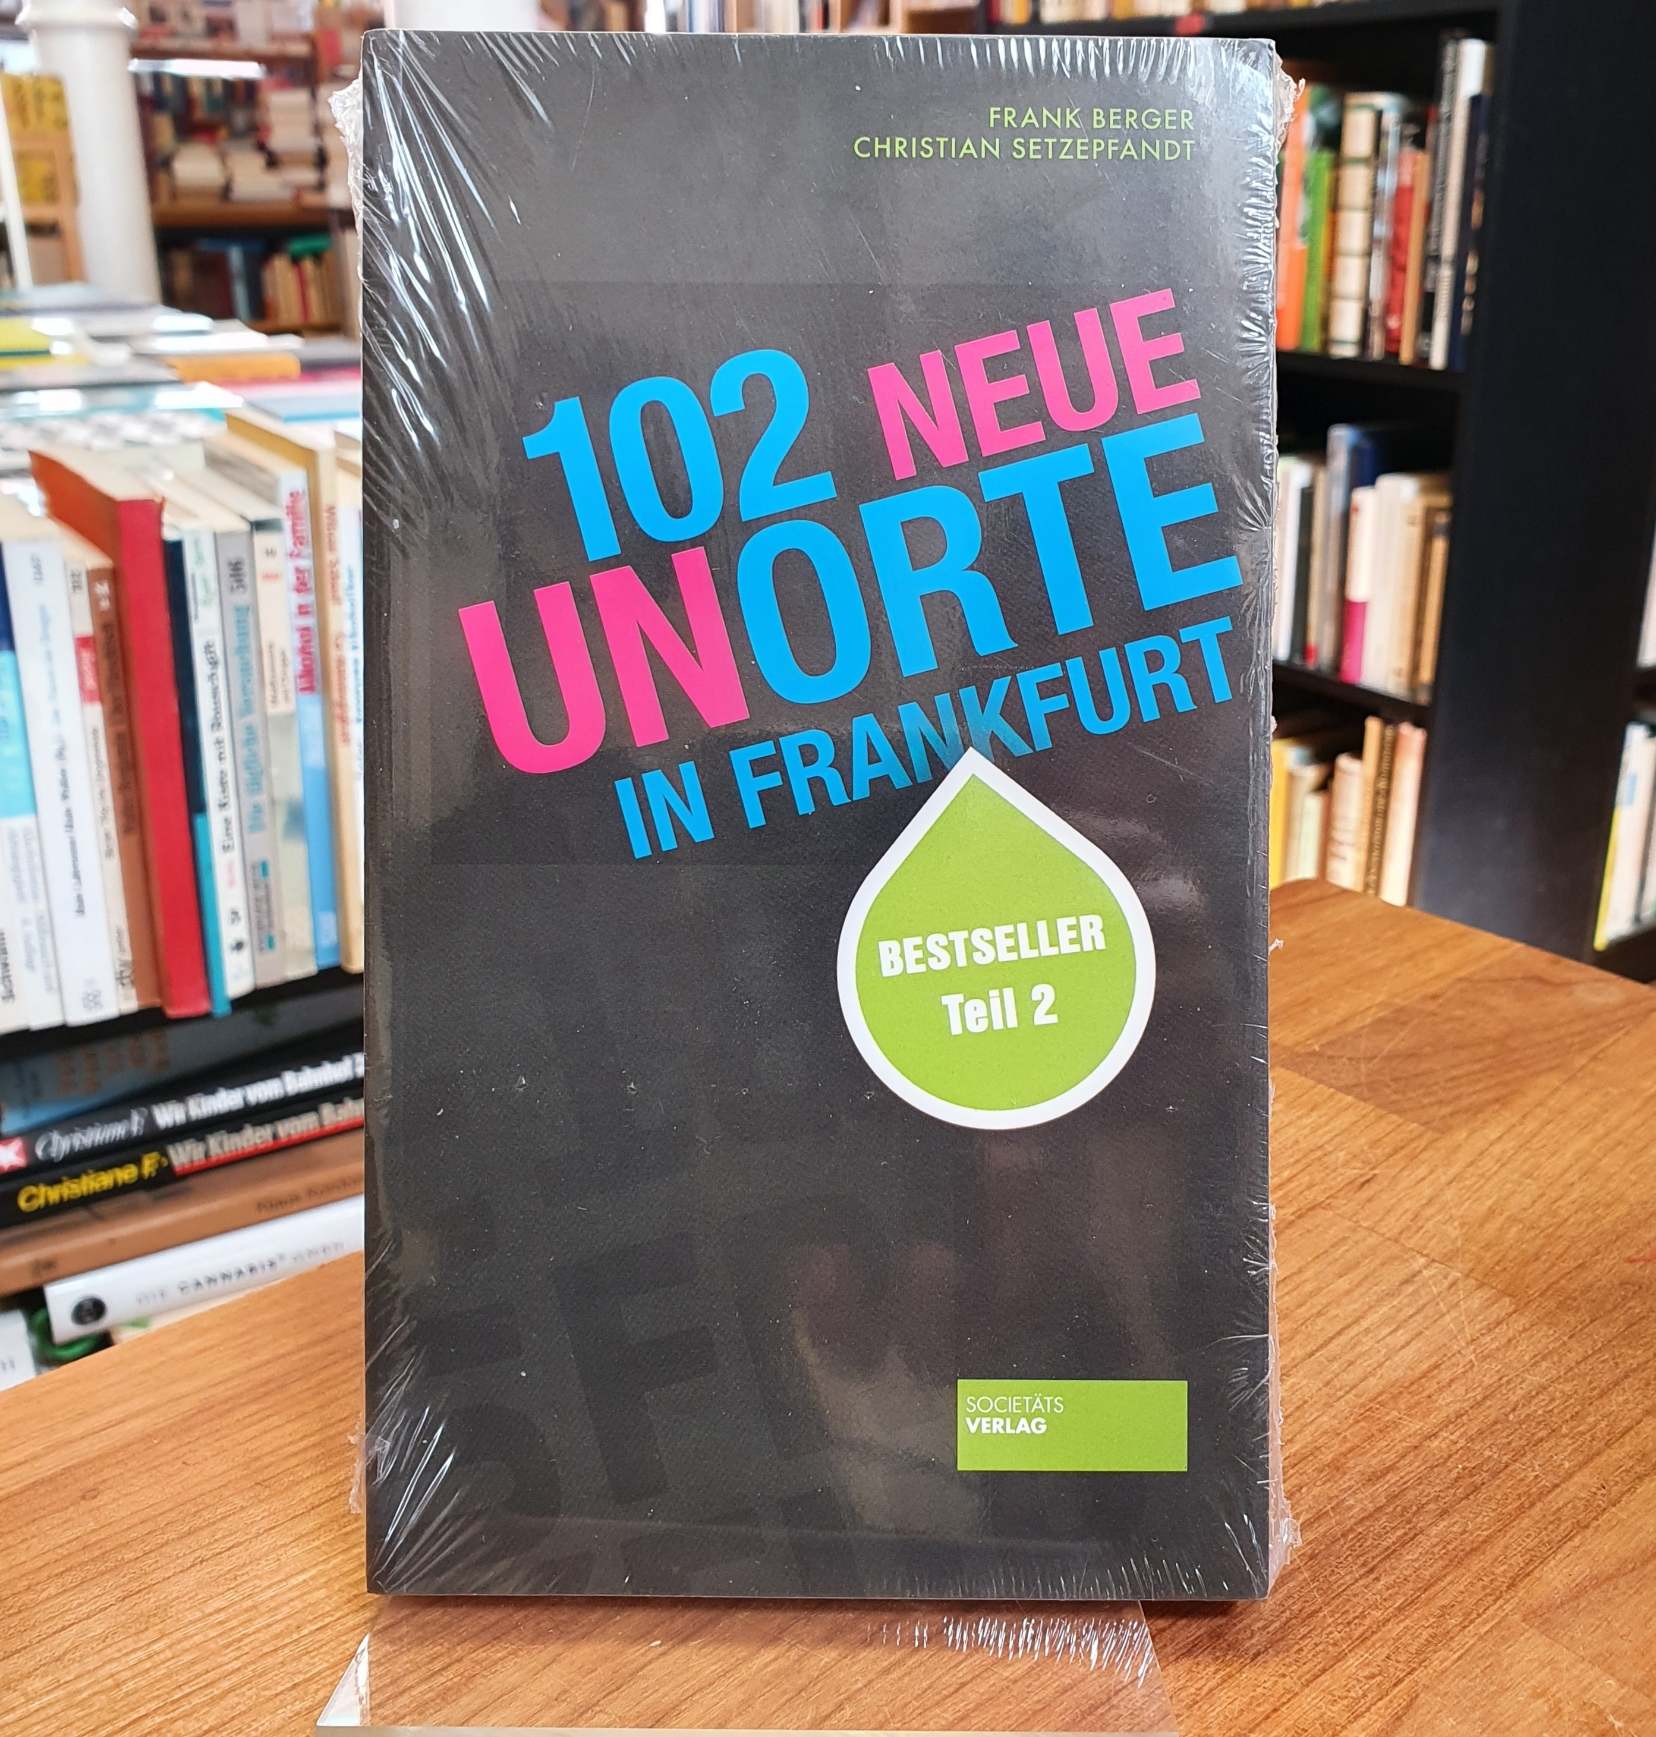 Berger, 102 neue Unorte in Frankfurt,